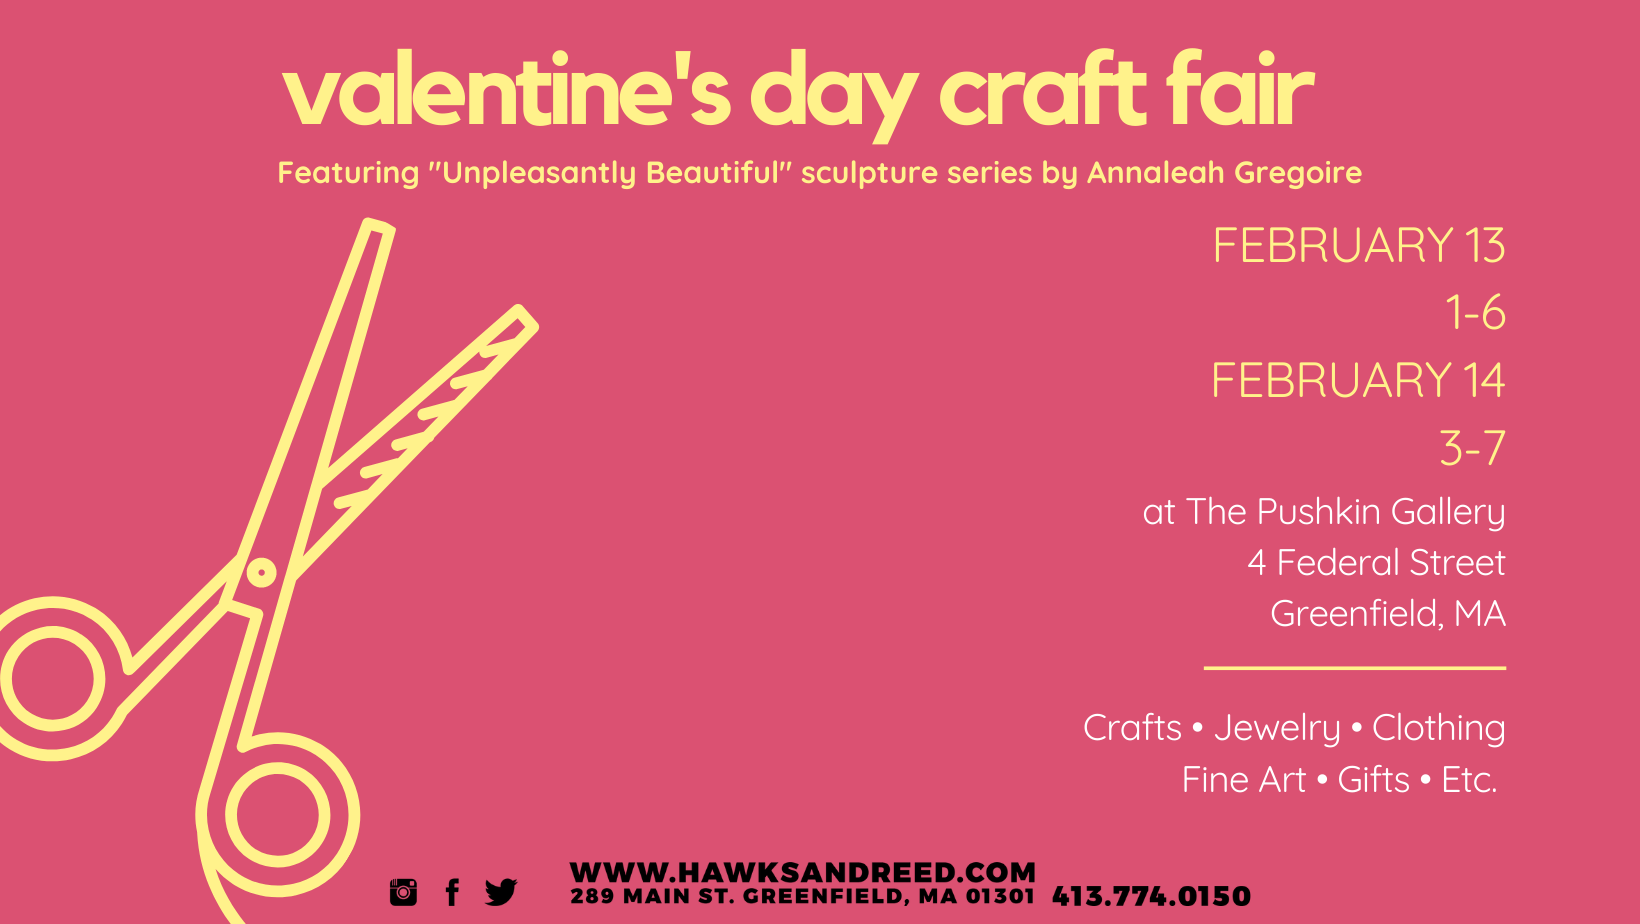 Valentine’s Day Craft Fair in the Pushkin